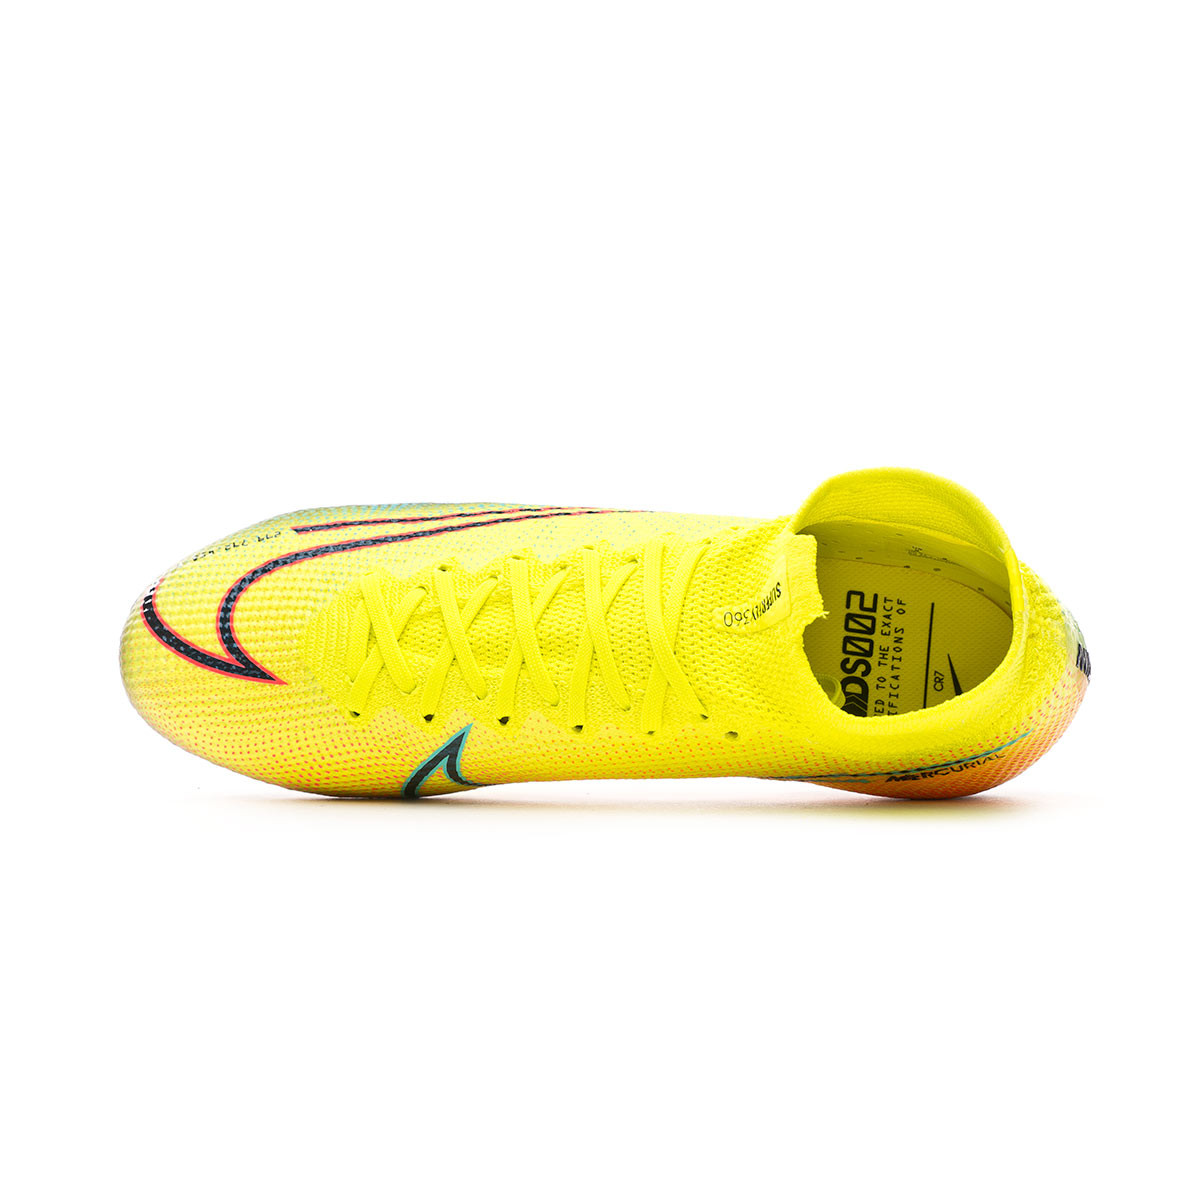 Nike Mercurial Superfly 7 Elite TF Artificial Turf Football Shoe.